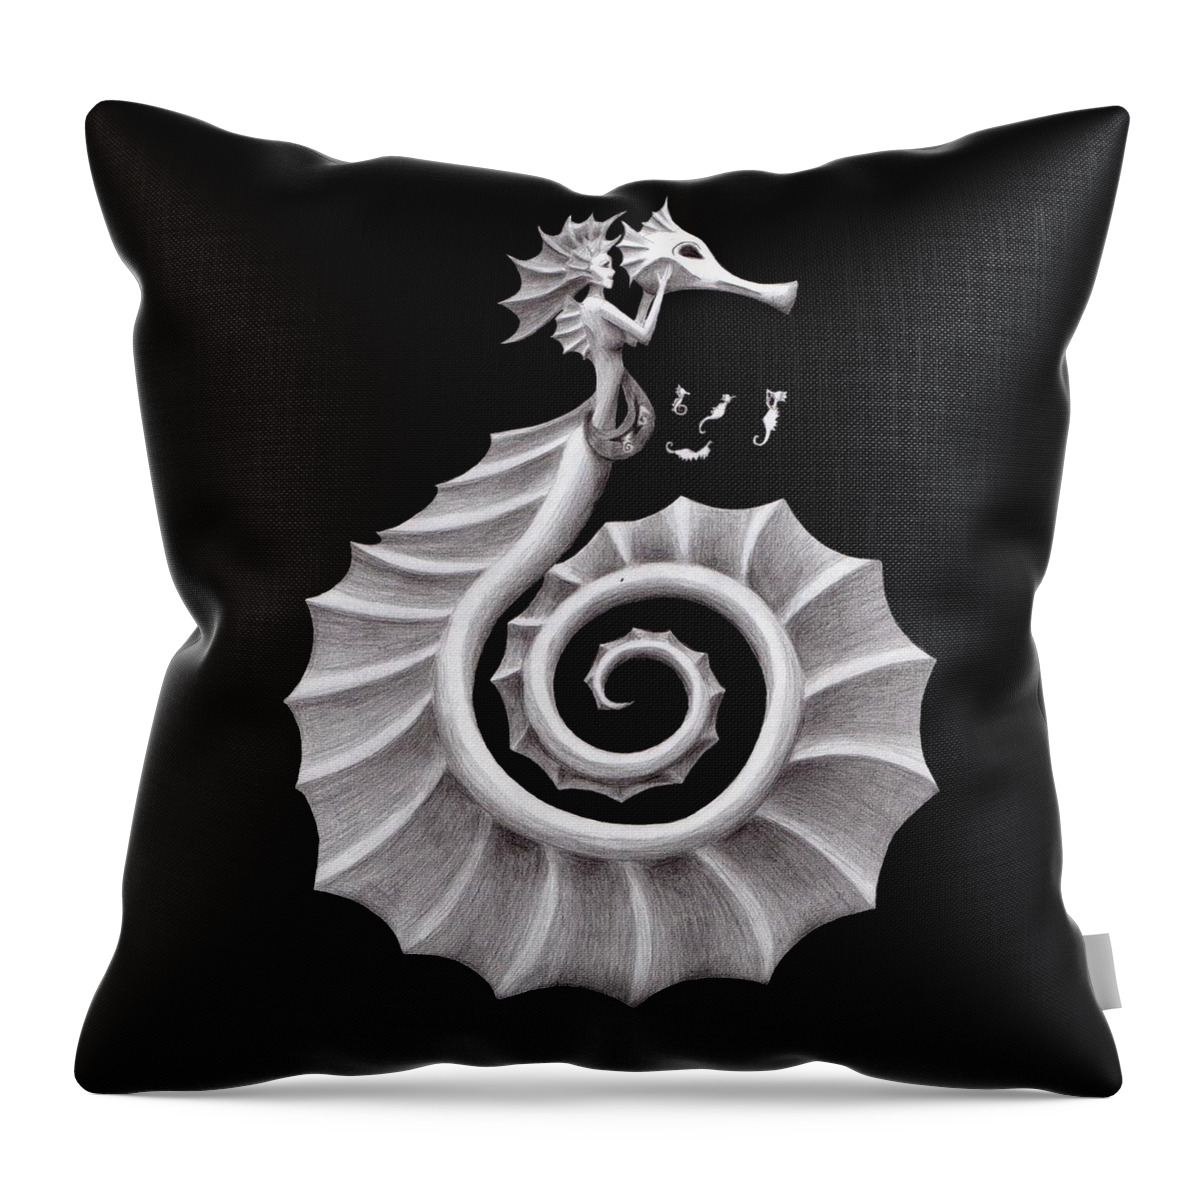 Seahorse Throw Pillow featuring the photograph Seahorse Siren by Sarah Krafft